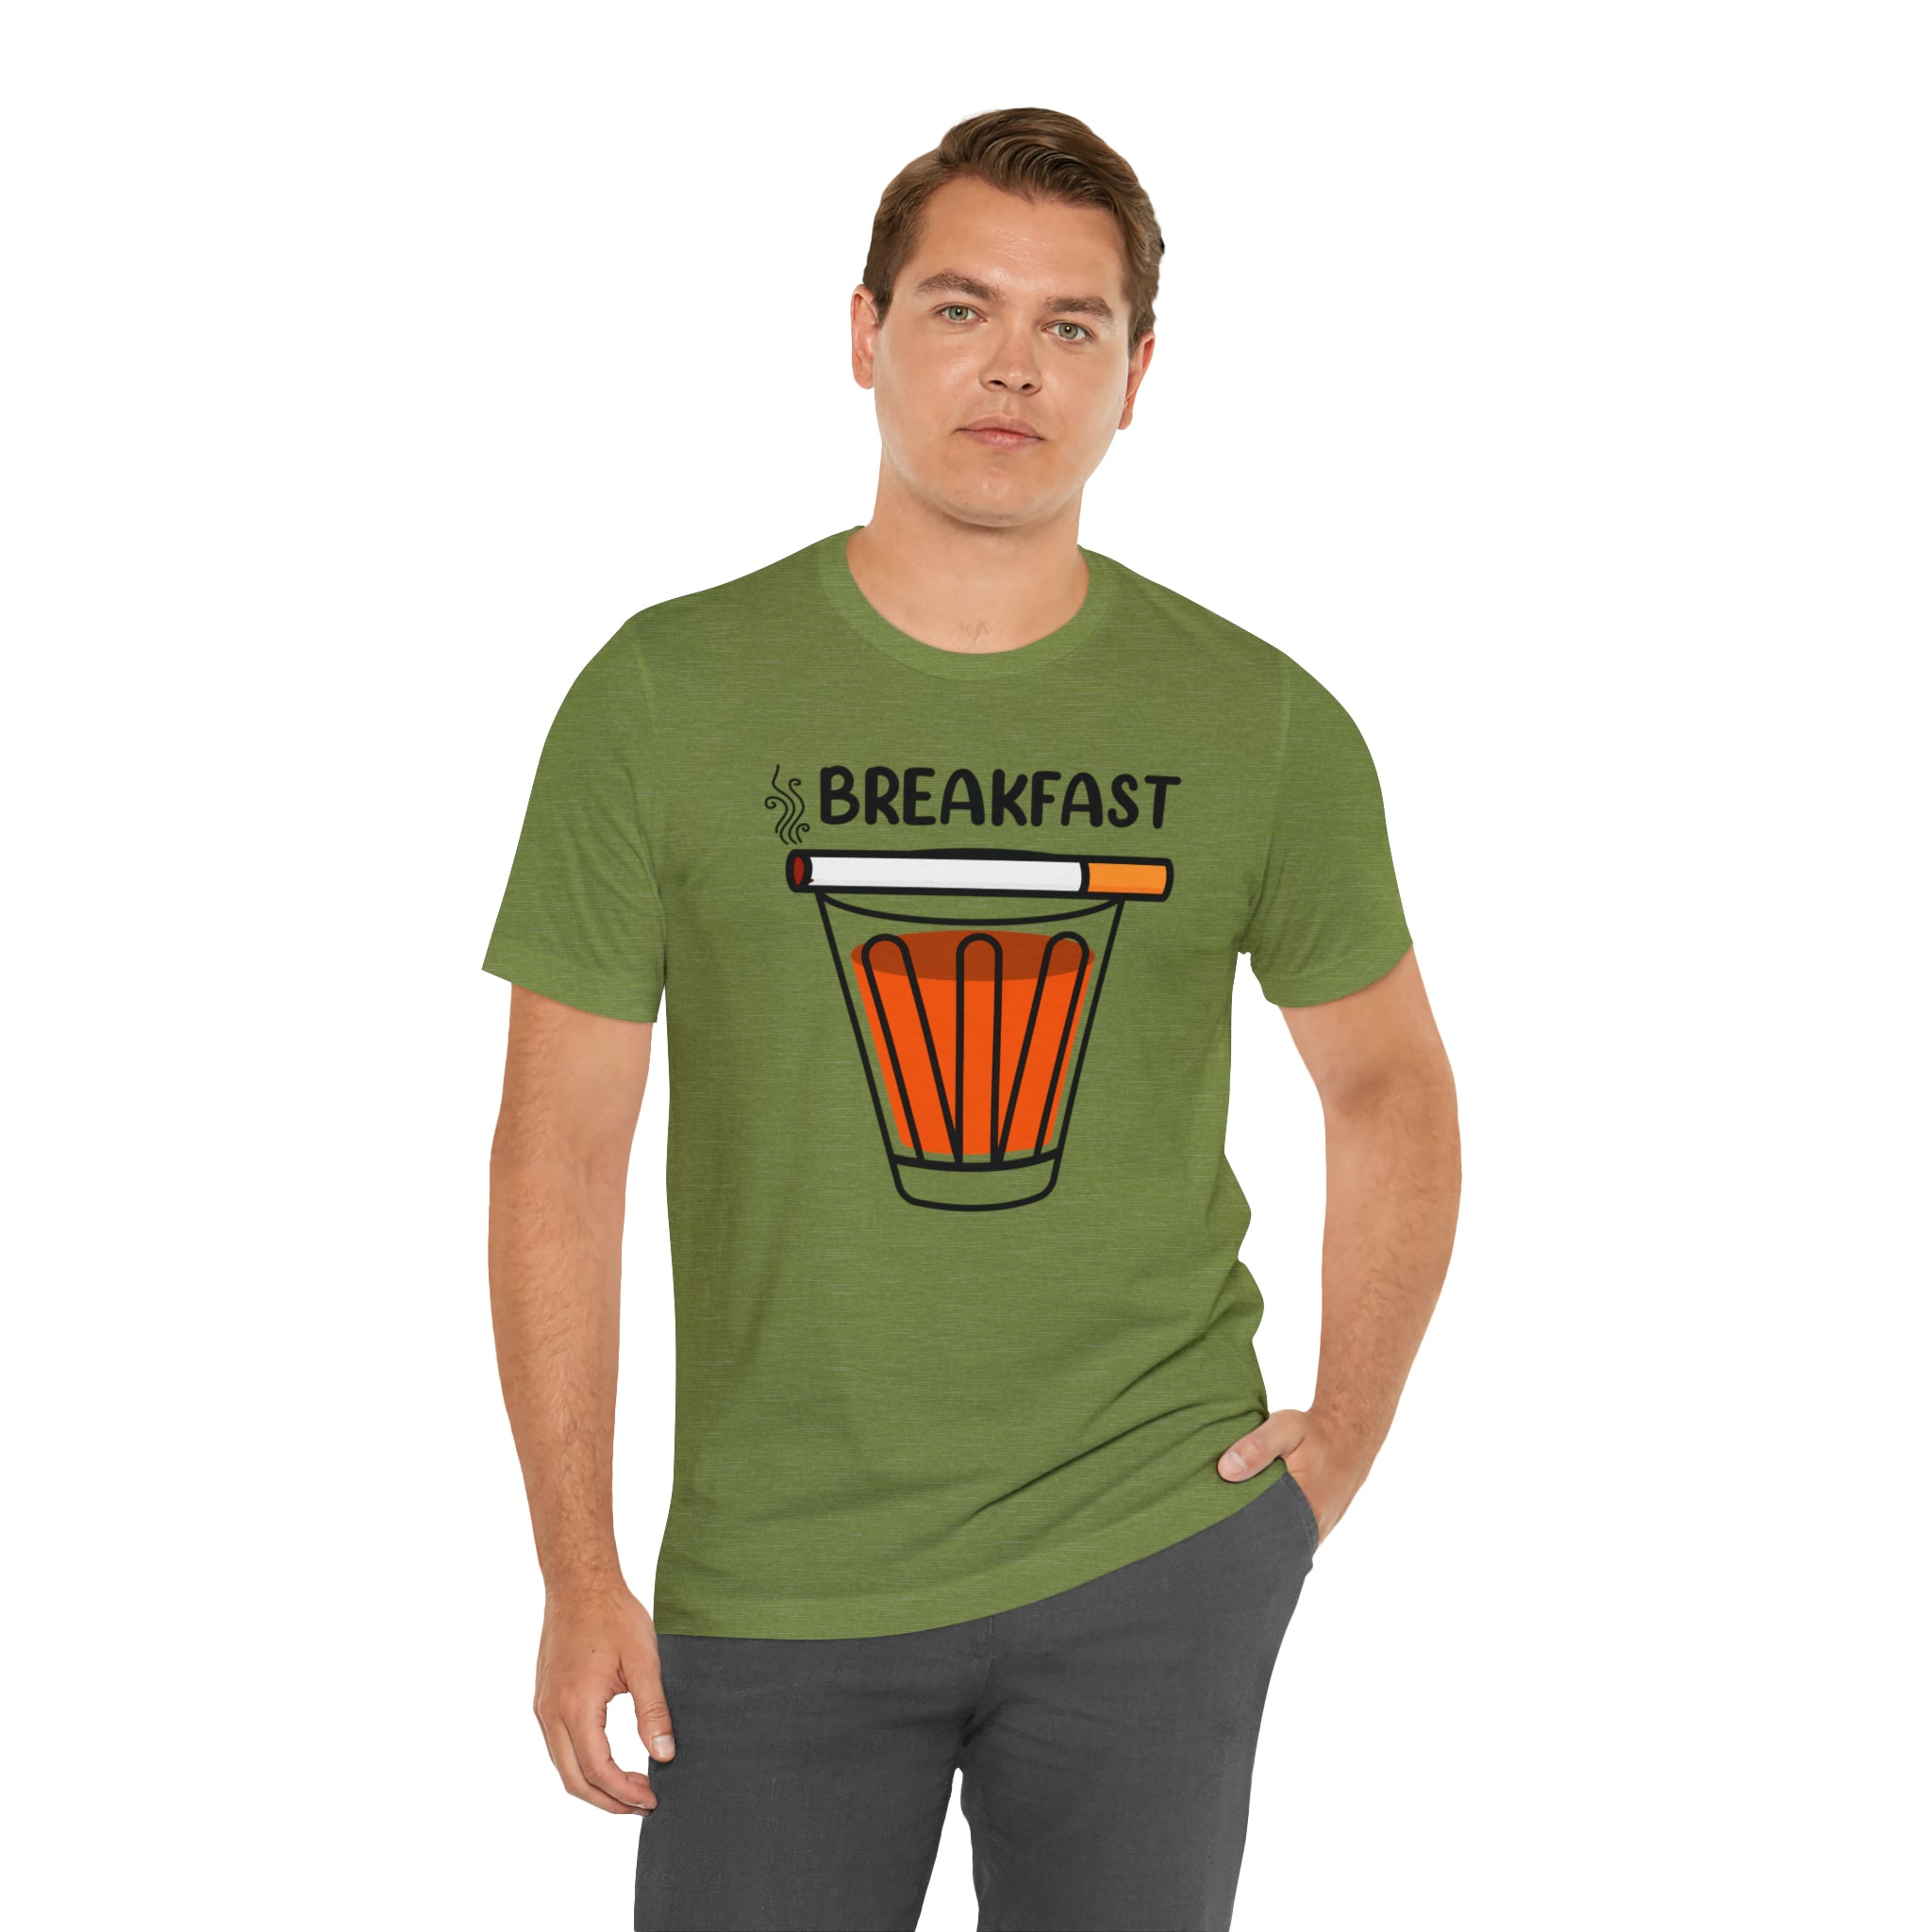 A man wearing a Breakfast T-Shirt that says breakfast.